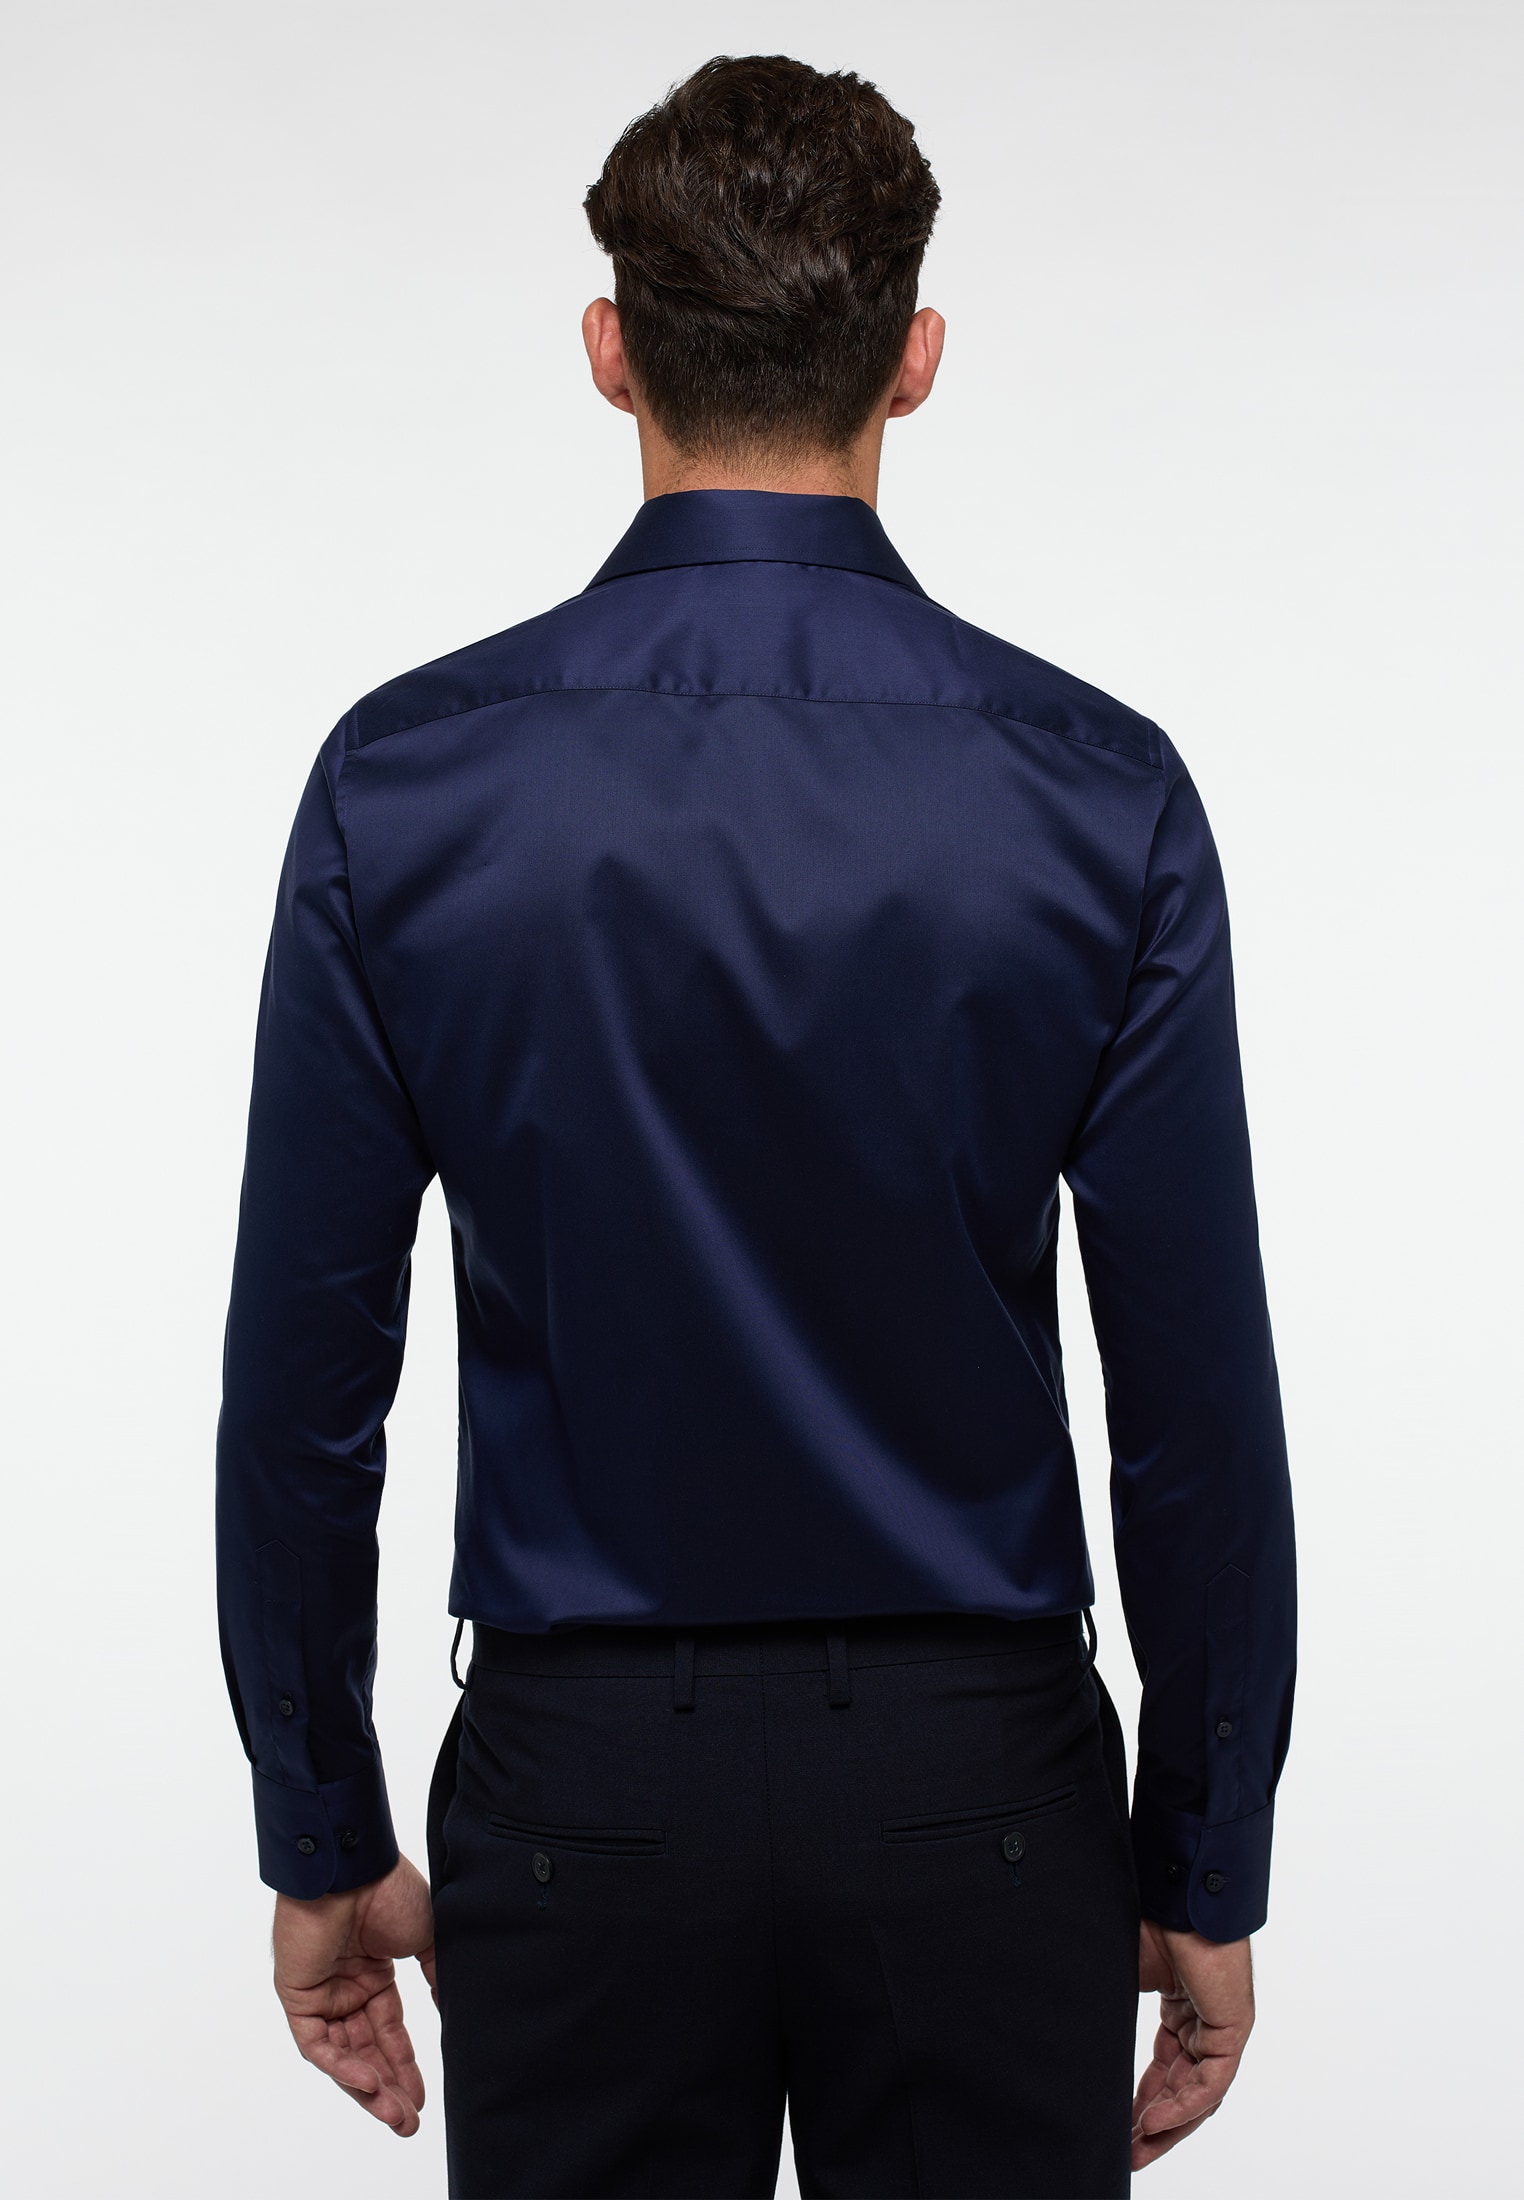 44 SLIM in dunkelblau Shirt | dunkelblau Luxury Langarm 1SH04299-01-81-44-1/1 unifarben FIT | | |